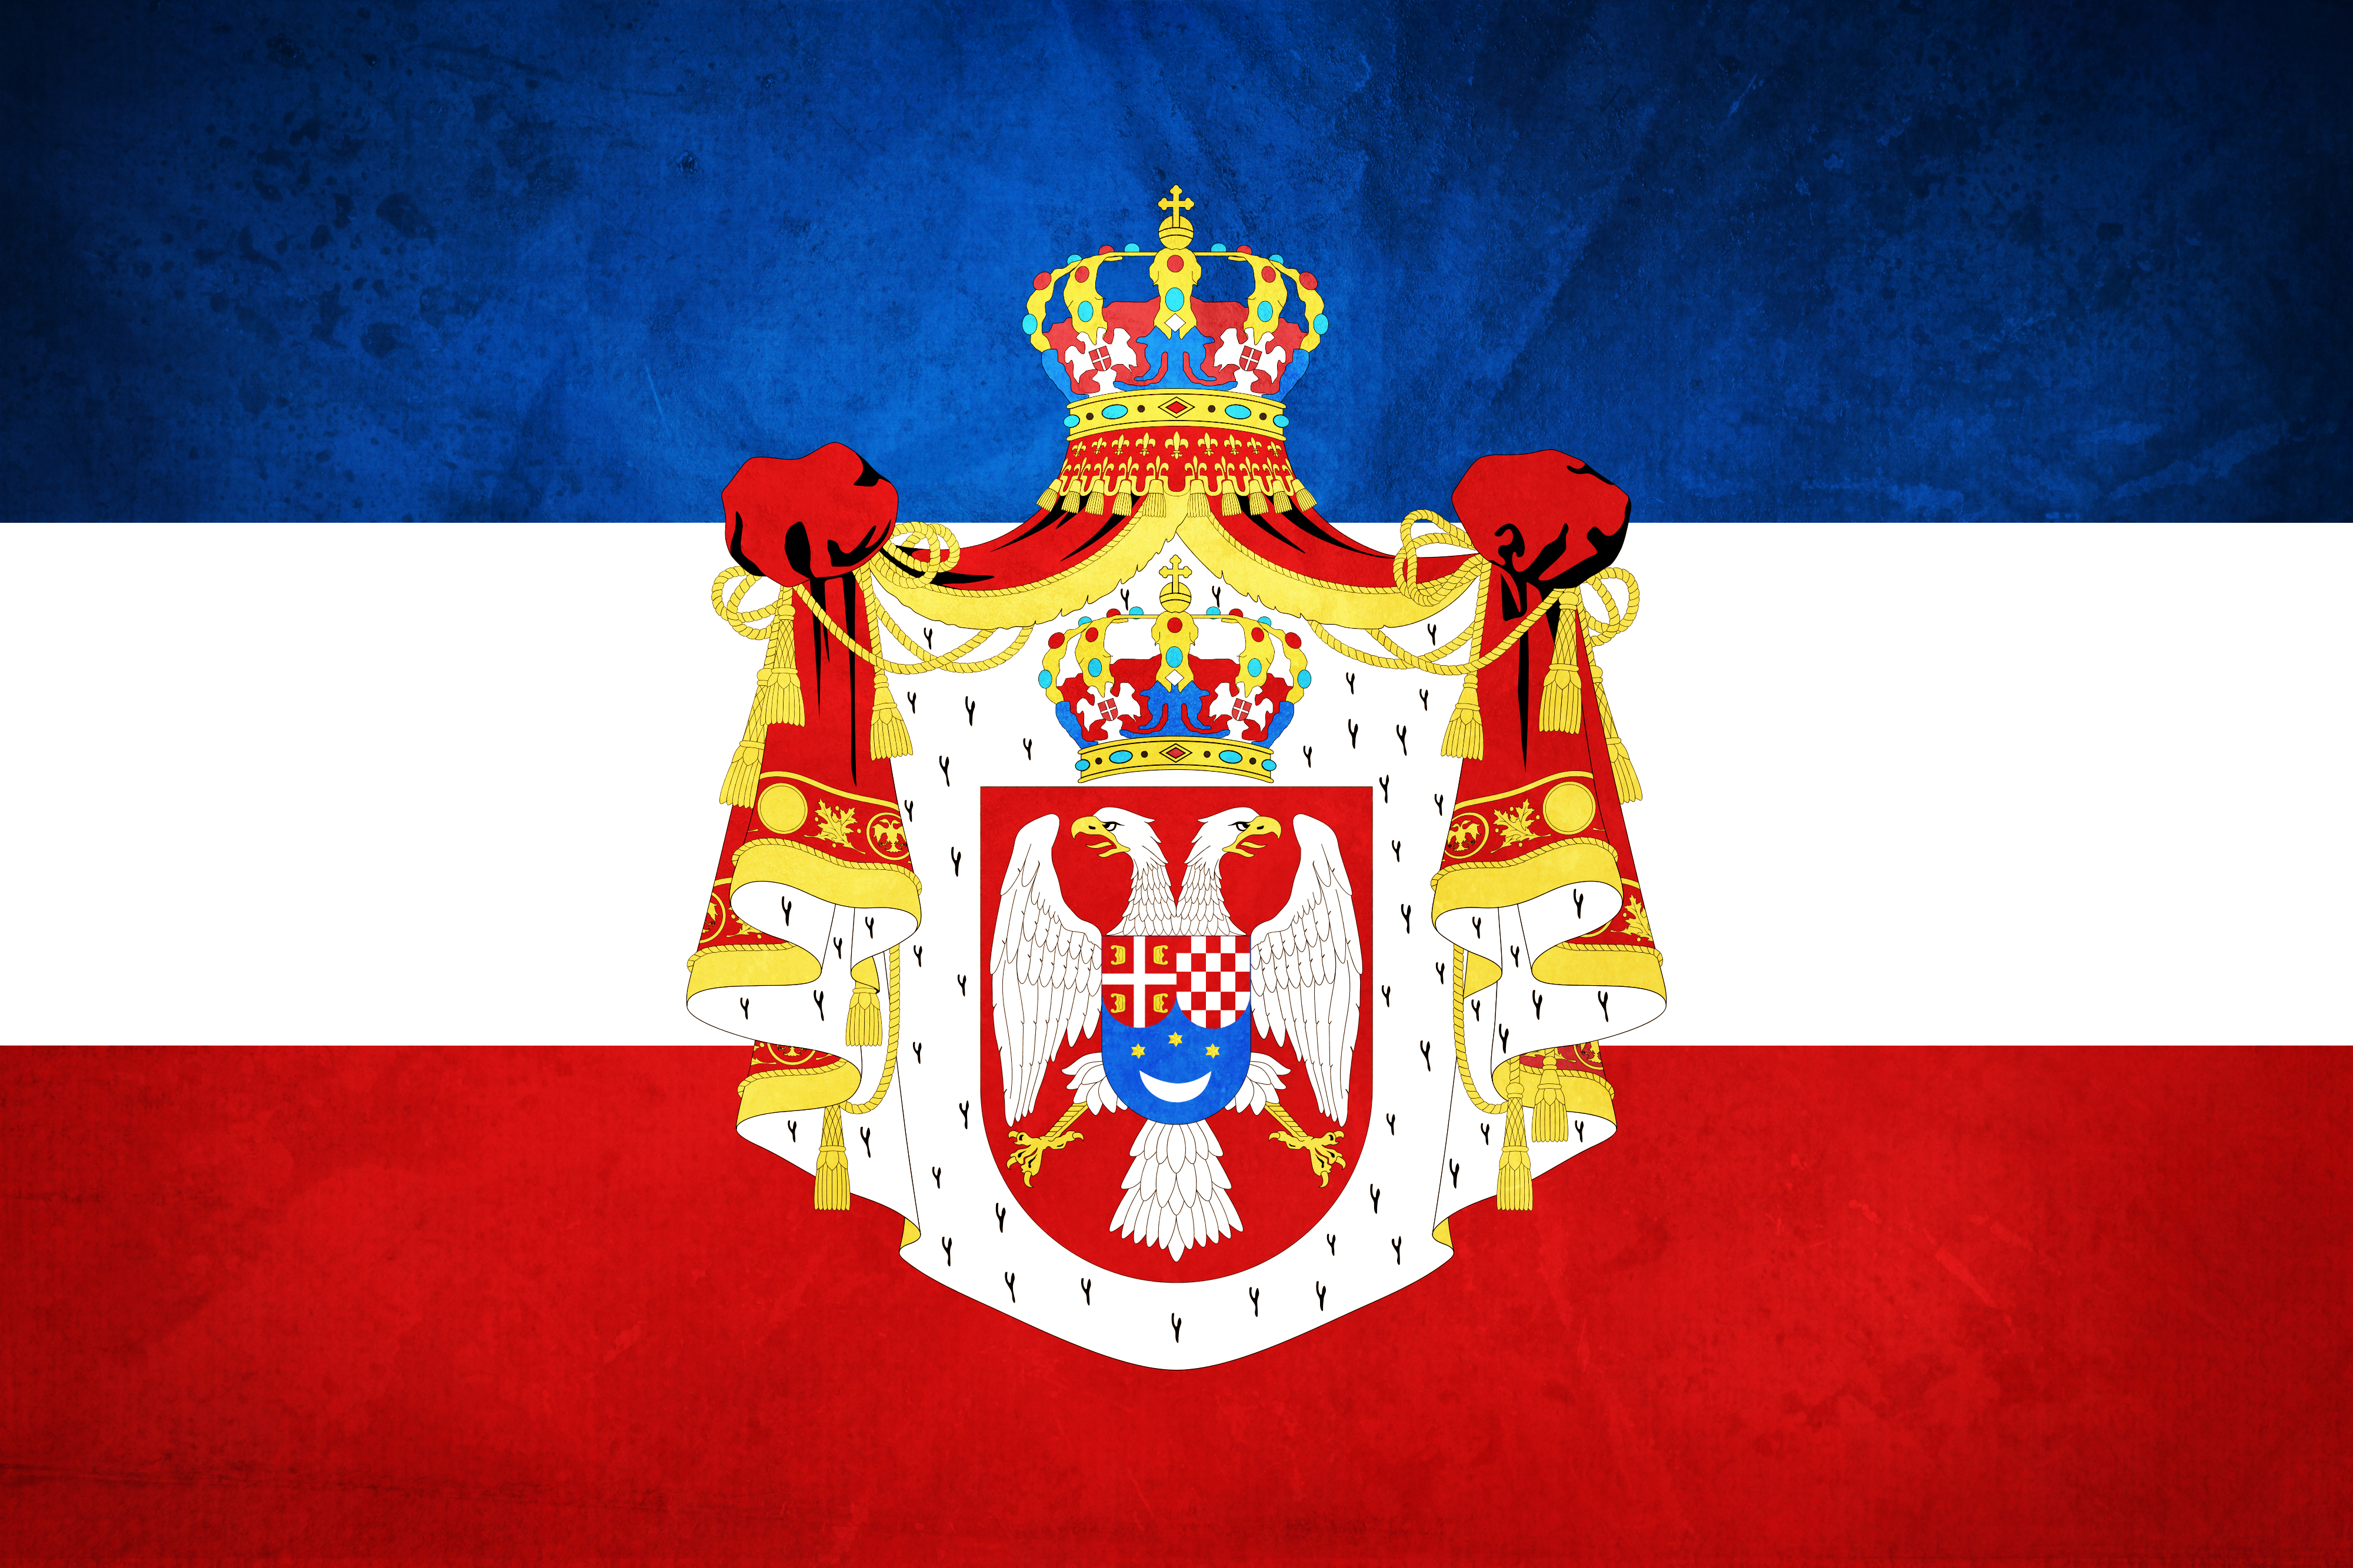 Serbia Grunge Flag by Ahijah on DeviantArt